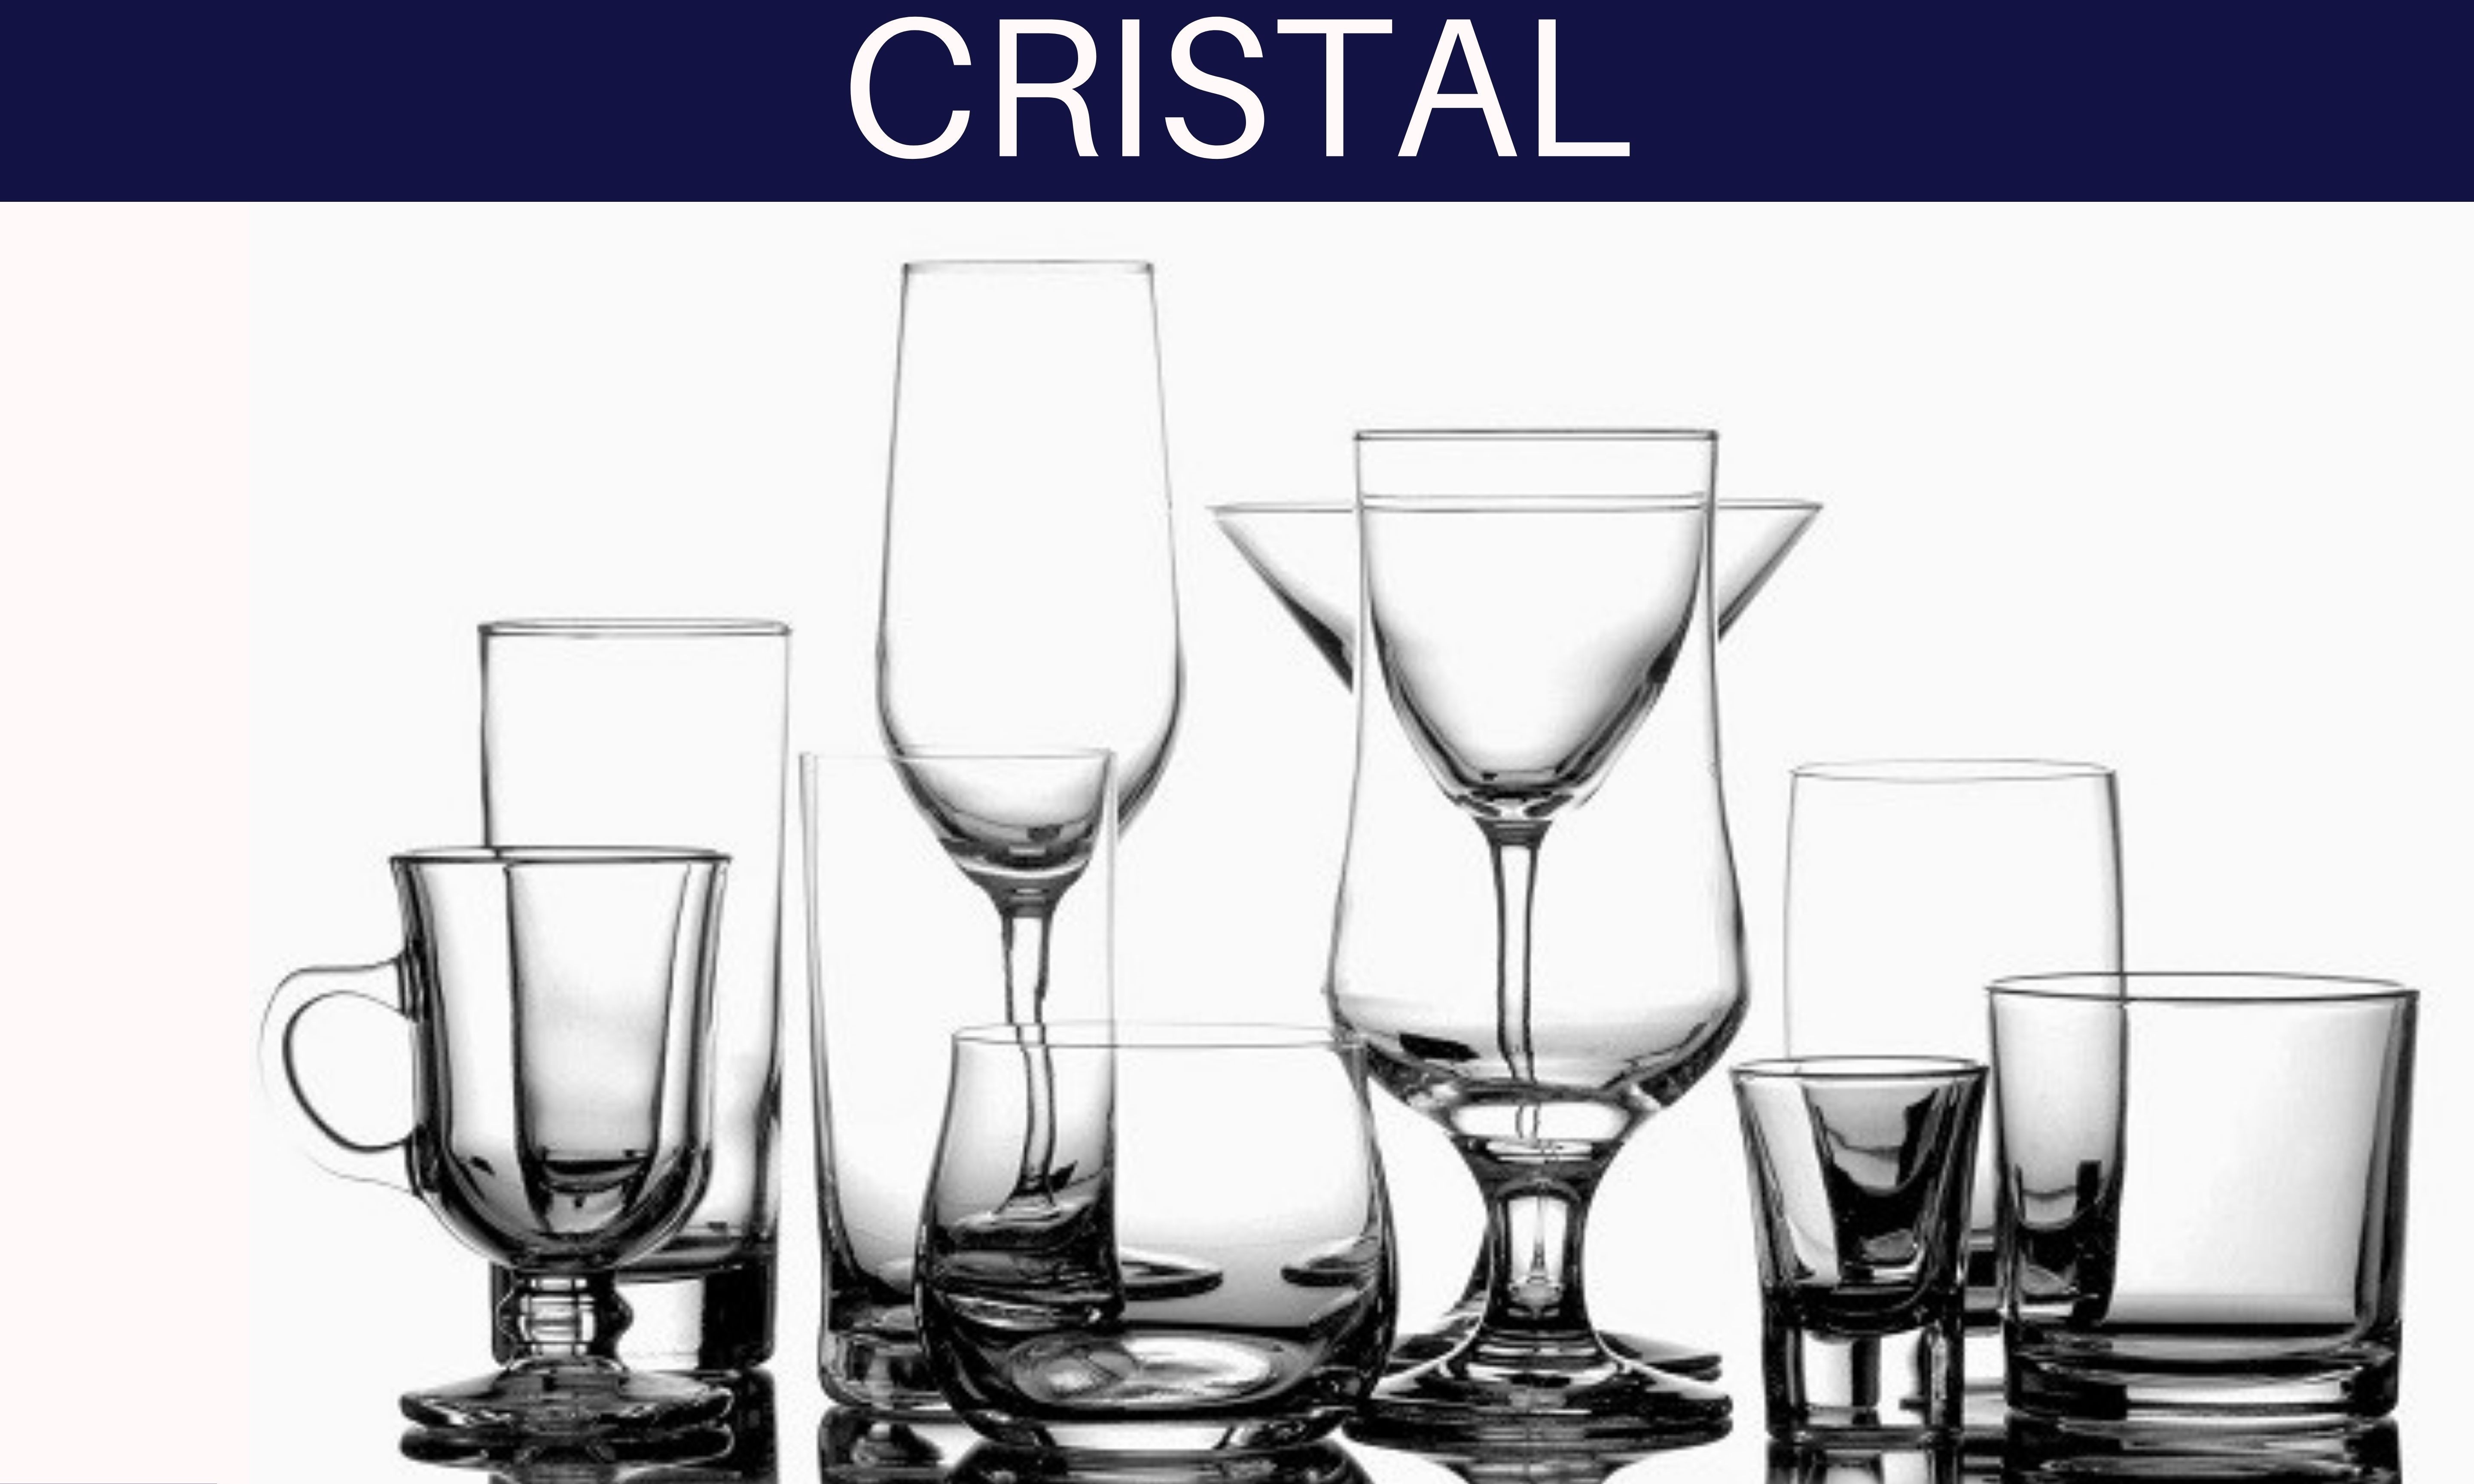 http://solocatalogo.com/es/13-cristal